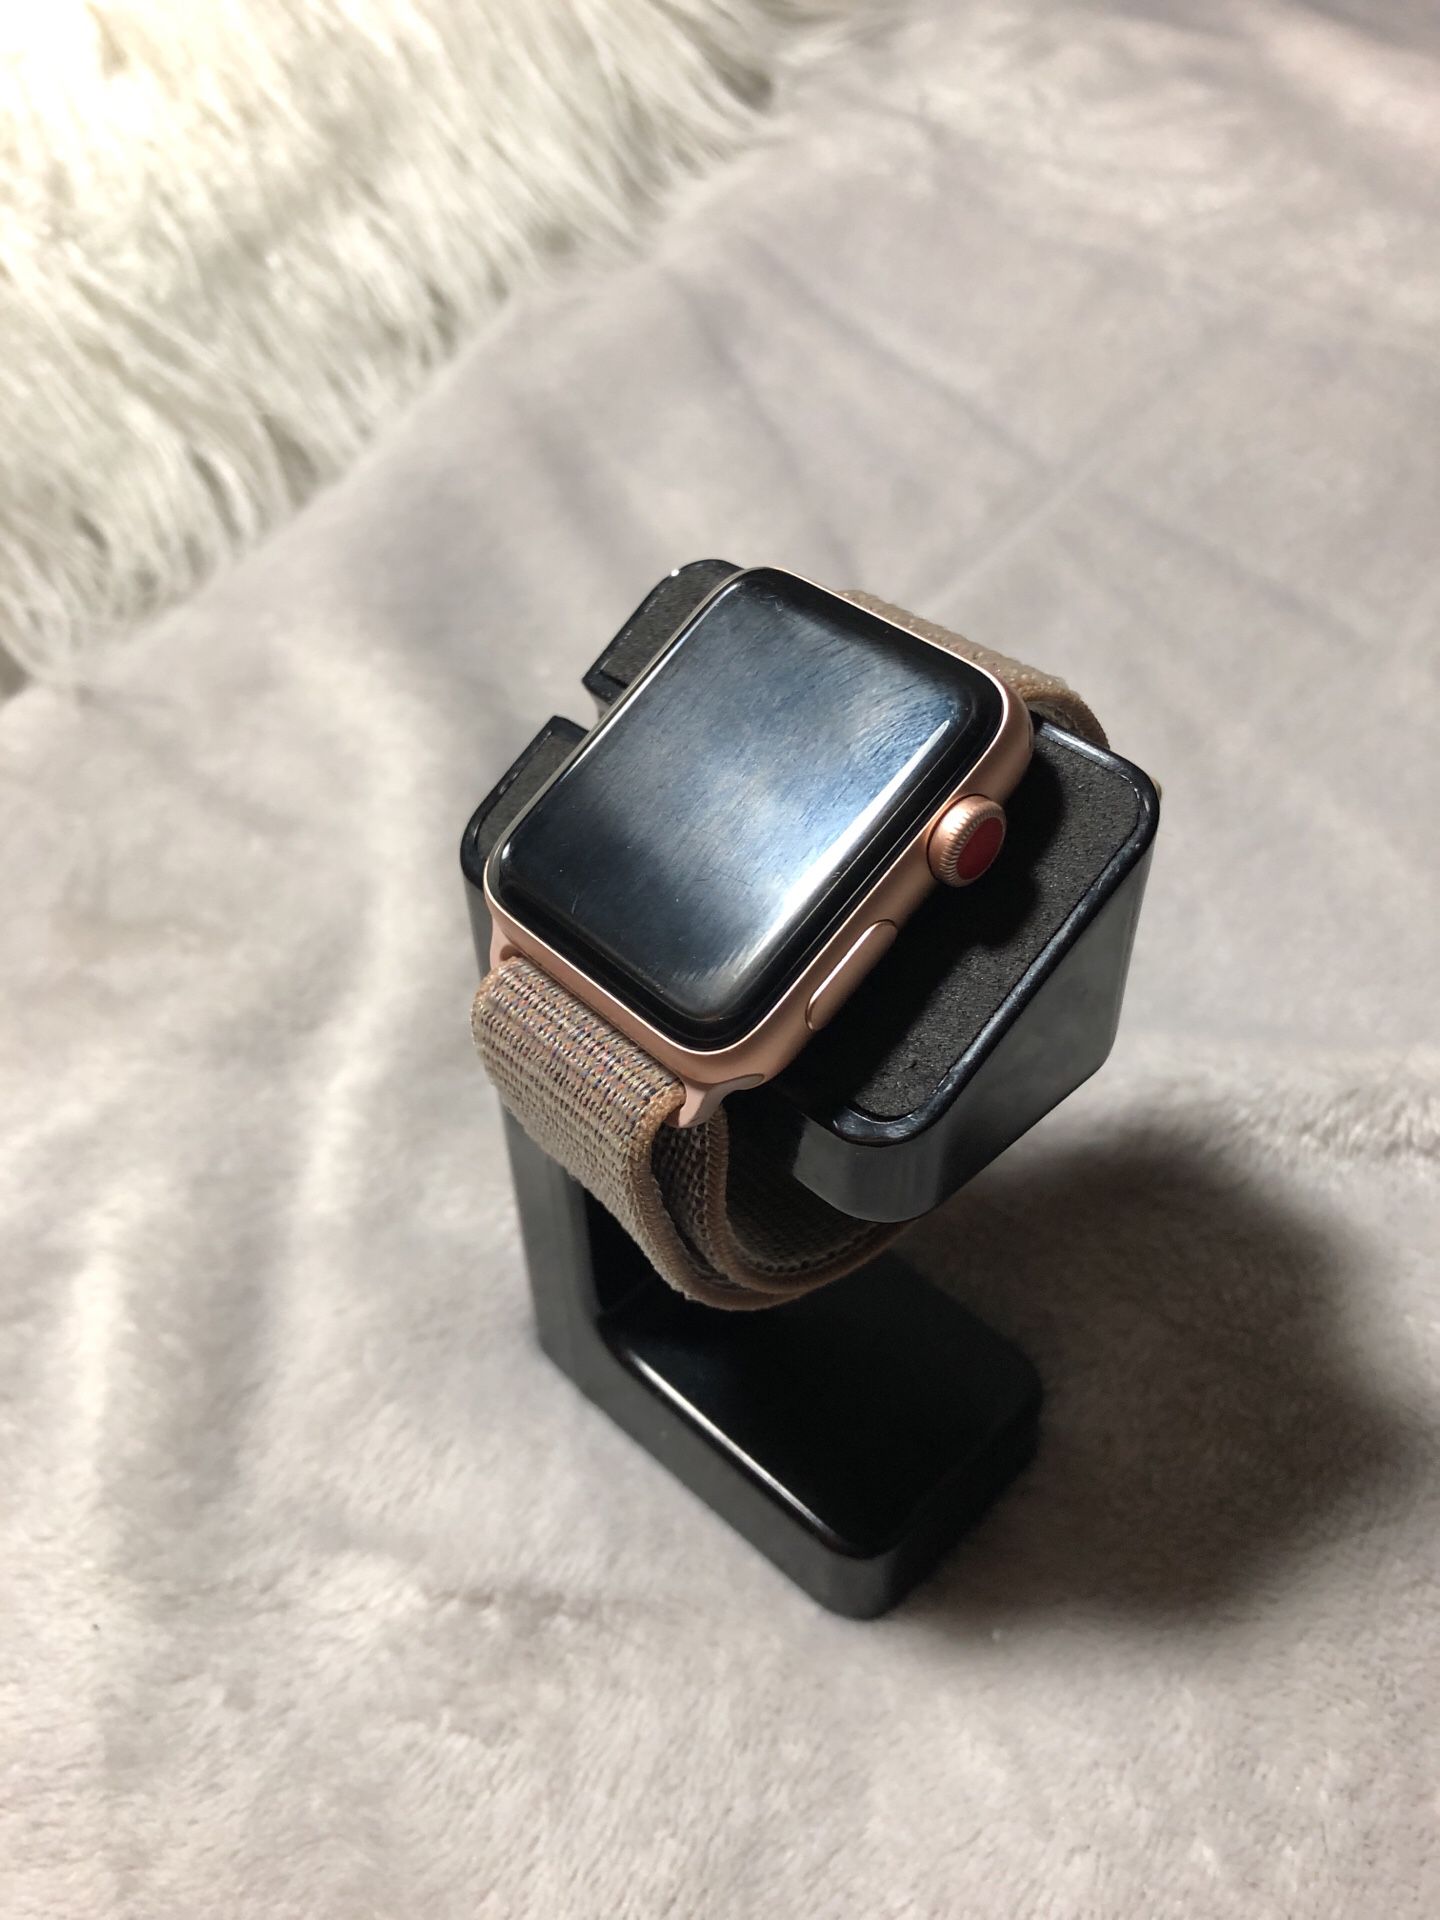 Rose Gold Apple Watch Series 3